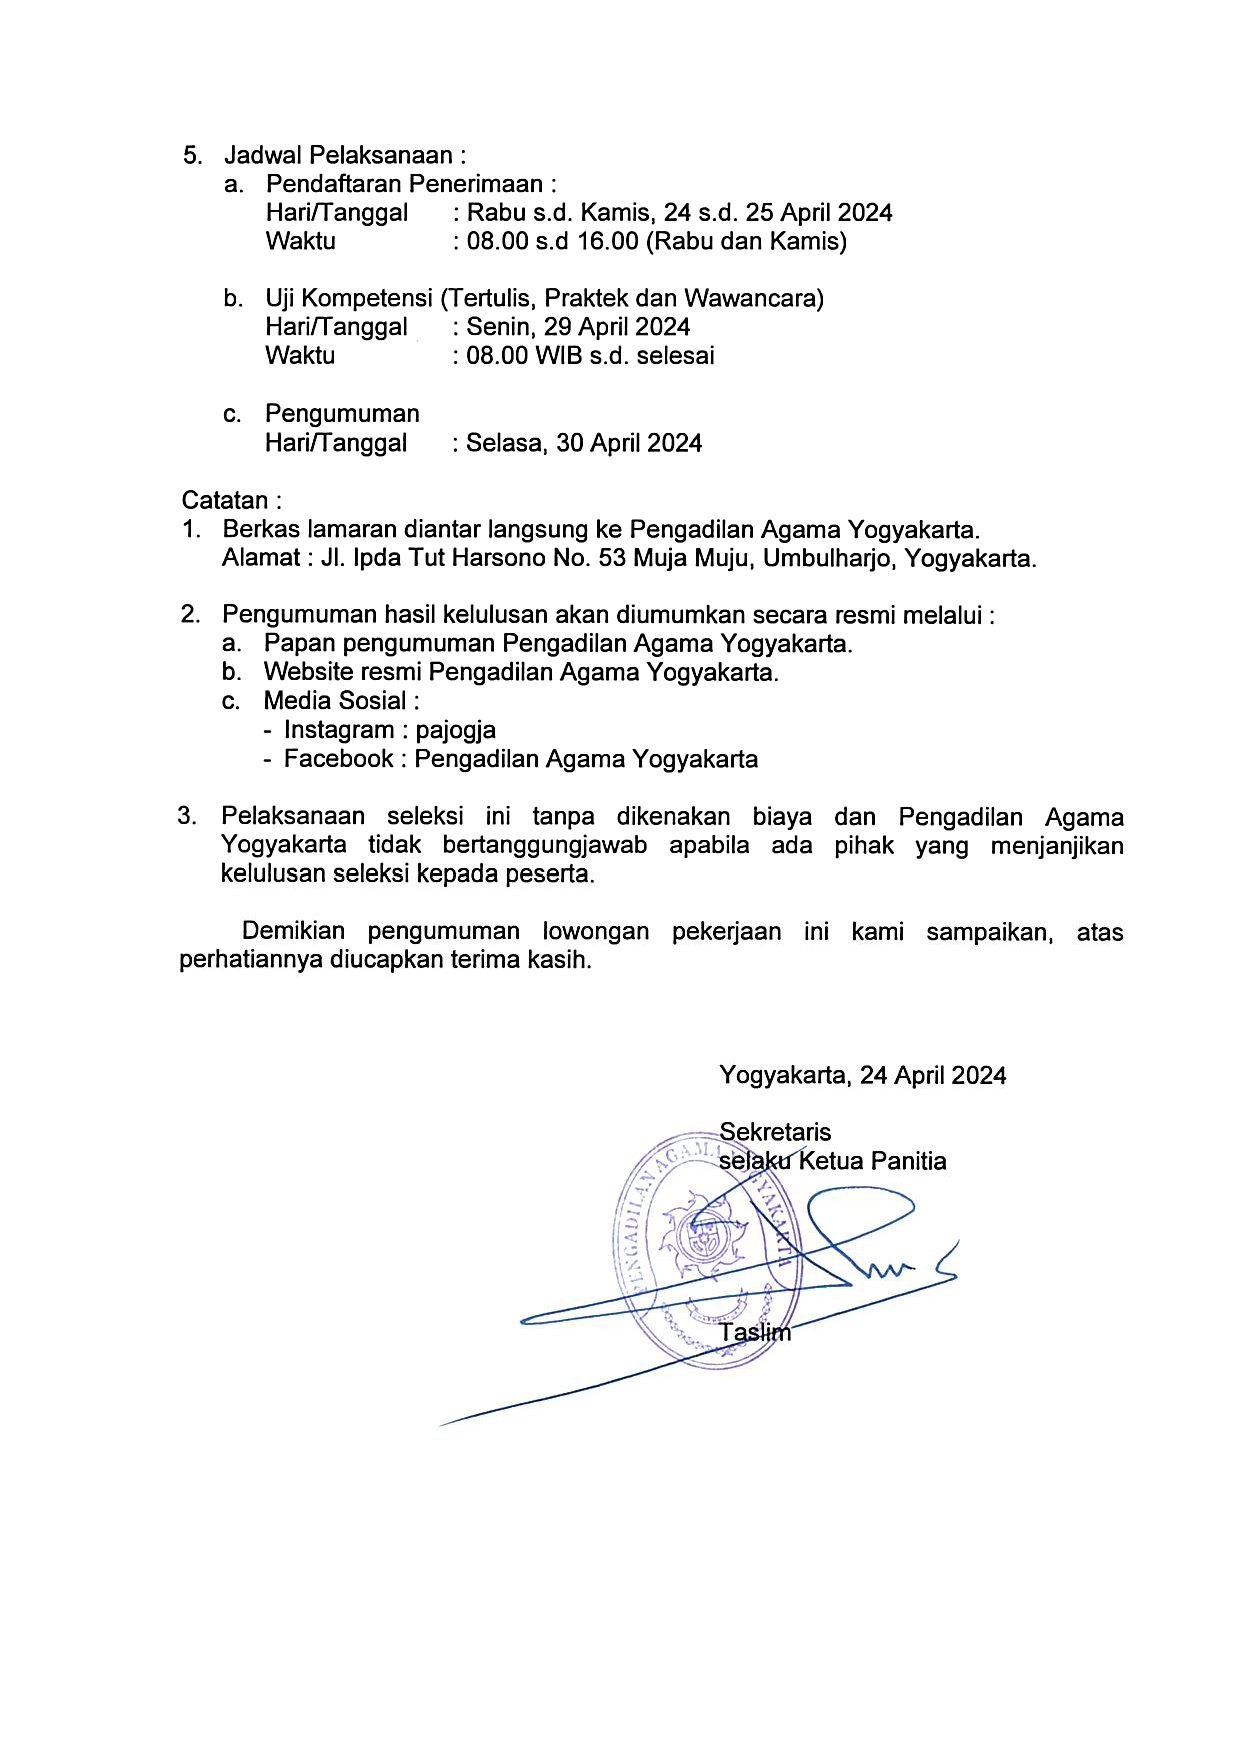 Penerimaan Pegawai Pengadilan Agama Yogyakarta Tahun 2024 (Minimal Lulusan SLTA atau sederajat)